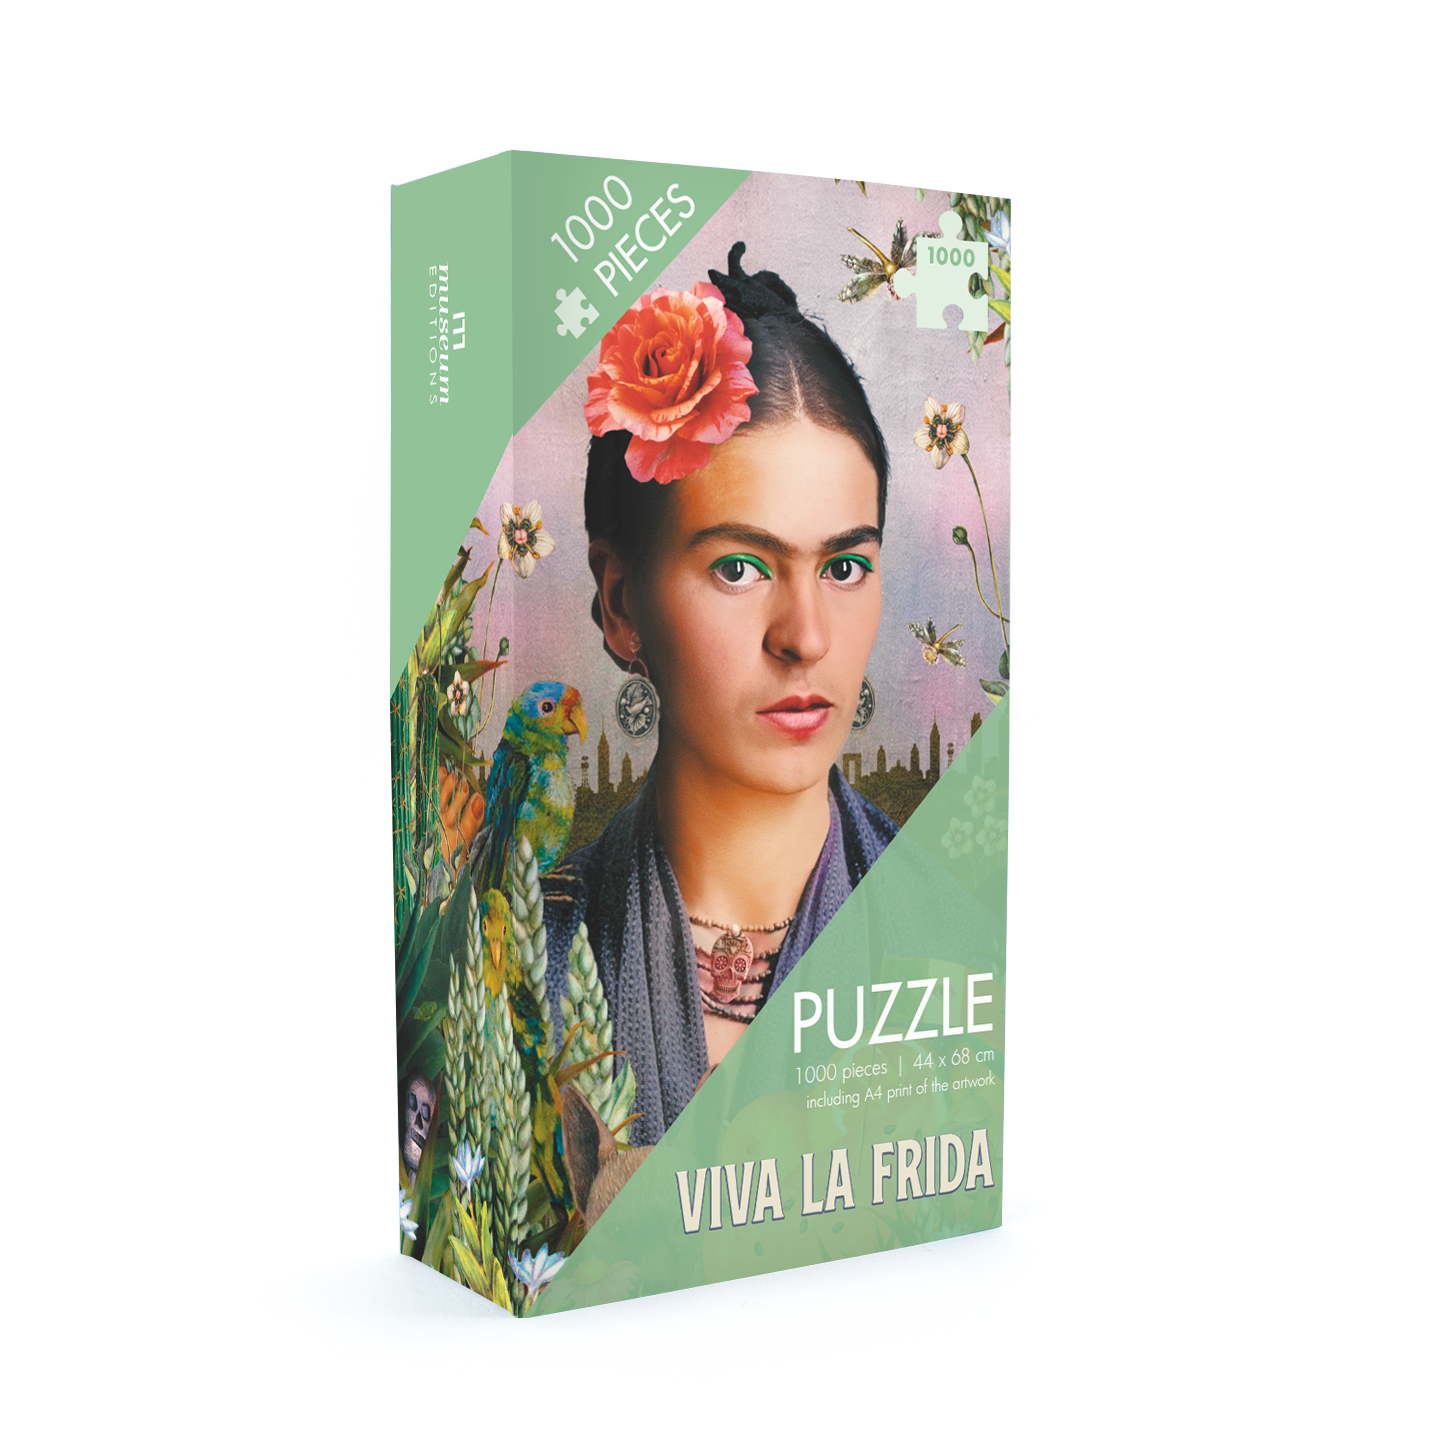 Puzzle, 1000 Pieces, Frida Kahlo